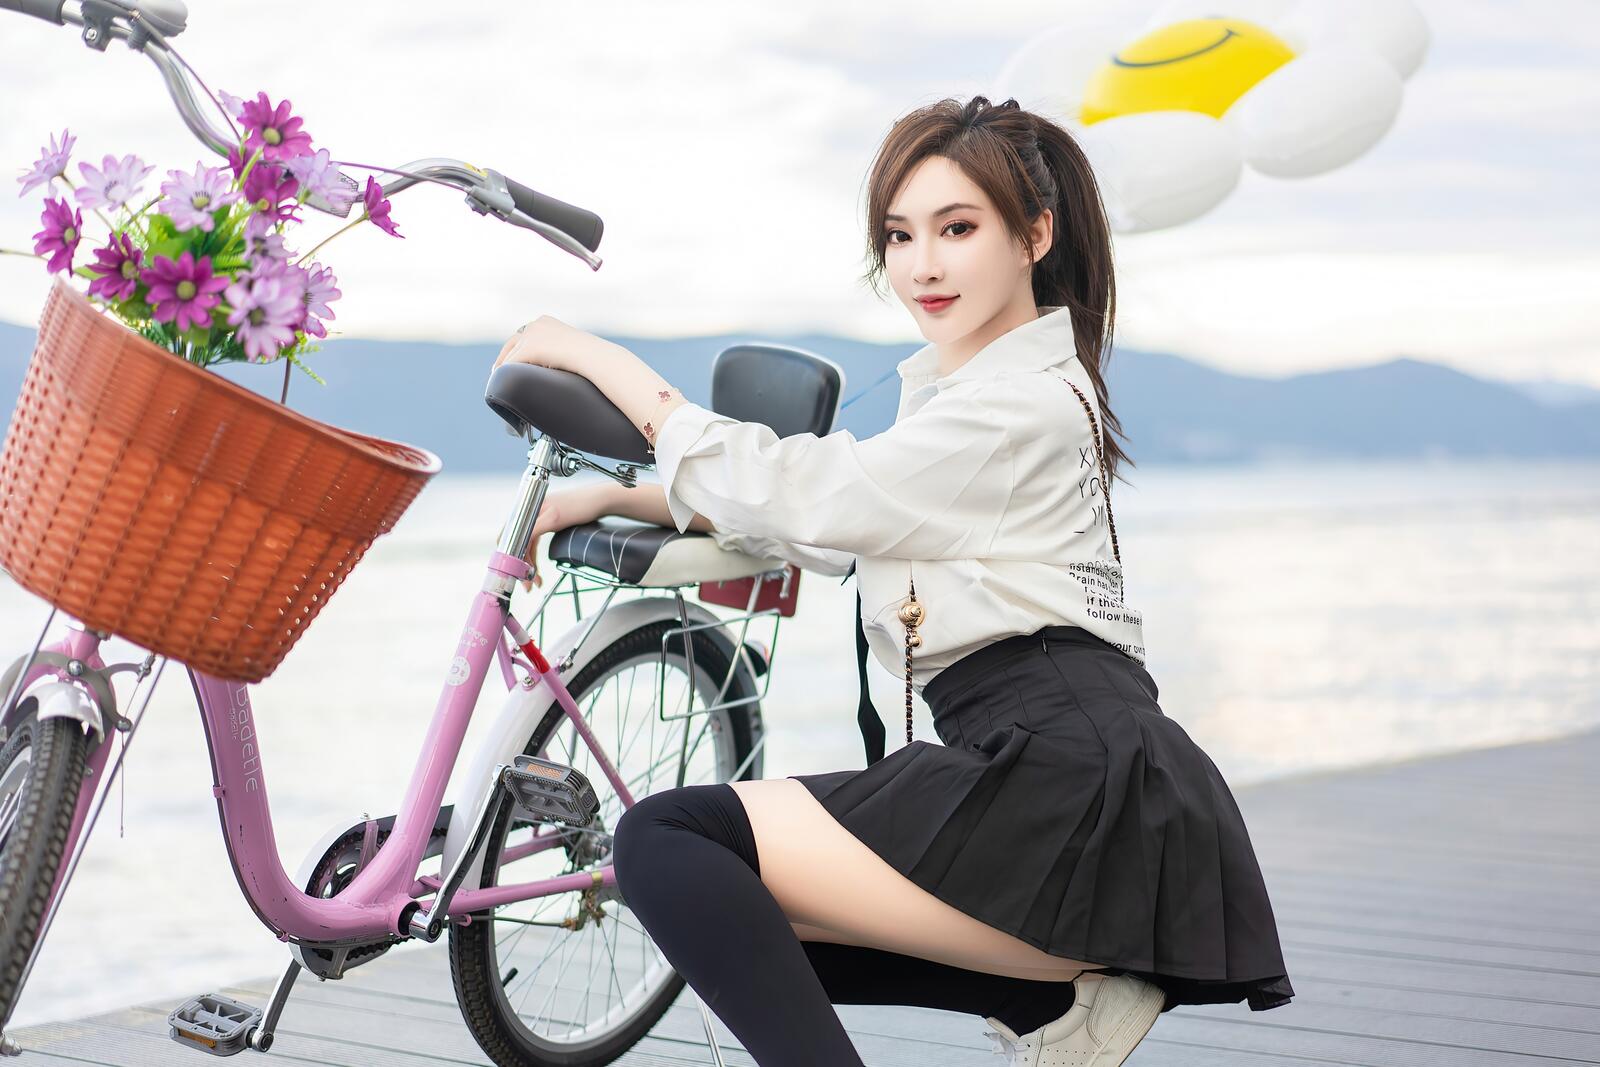 Free photo Chinese photo model Zhou Yan Xi, wearing a black miniskirt and socks, crouched next to a bicycle on the beach